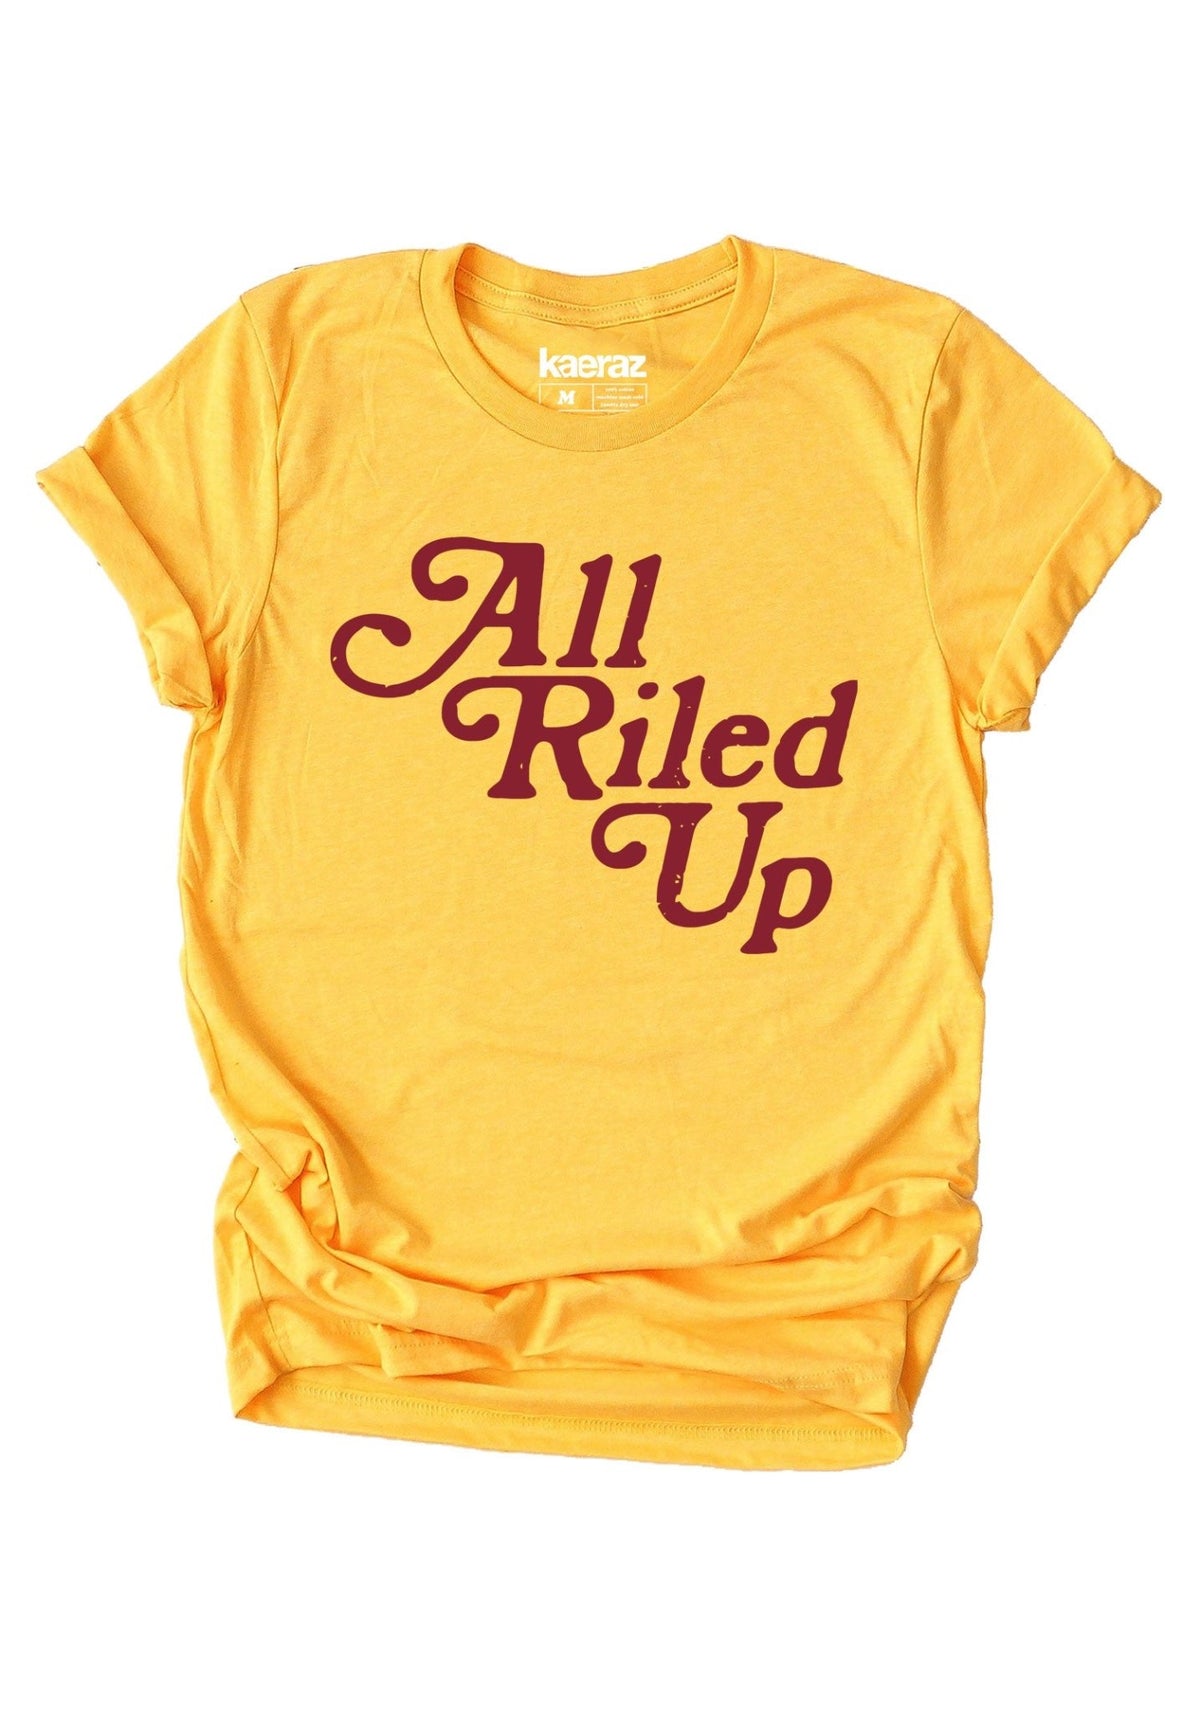 All Riled Up Tee by kaeraz 70s 70s shirt 70s shirt women